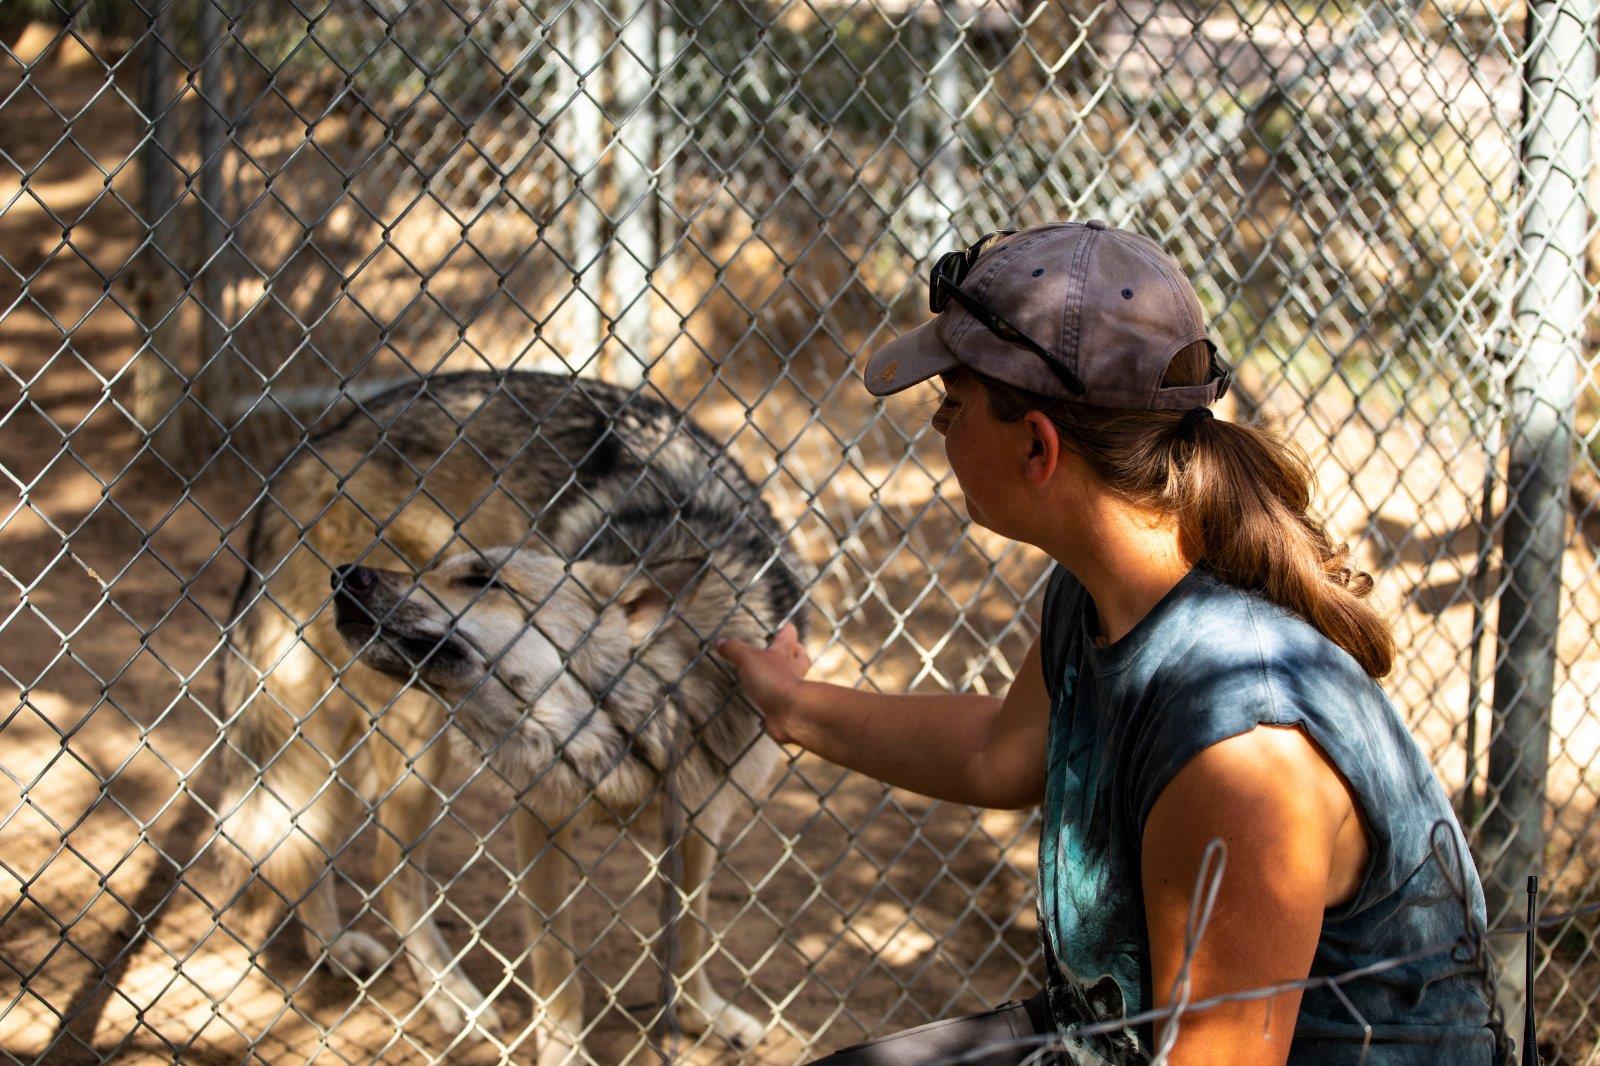 Grants, New Mexico - wolf sanctuary